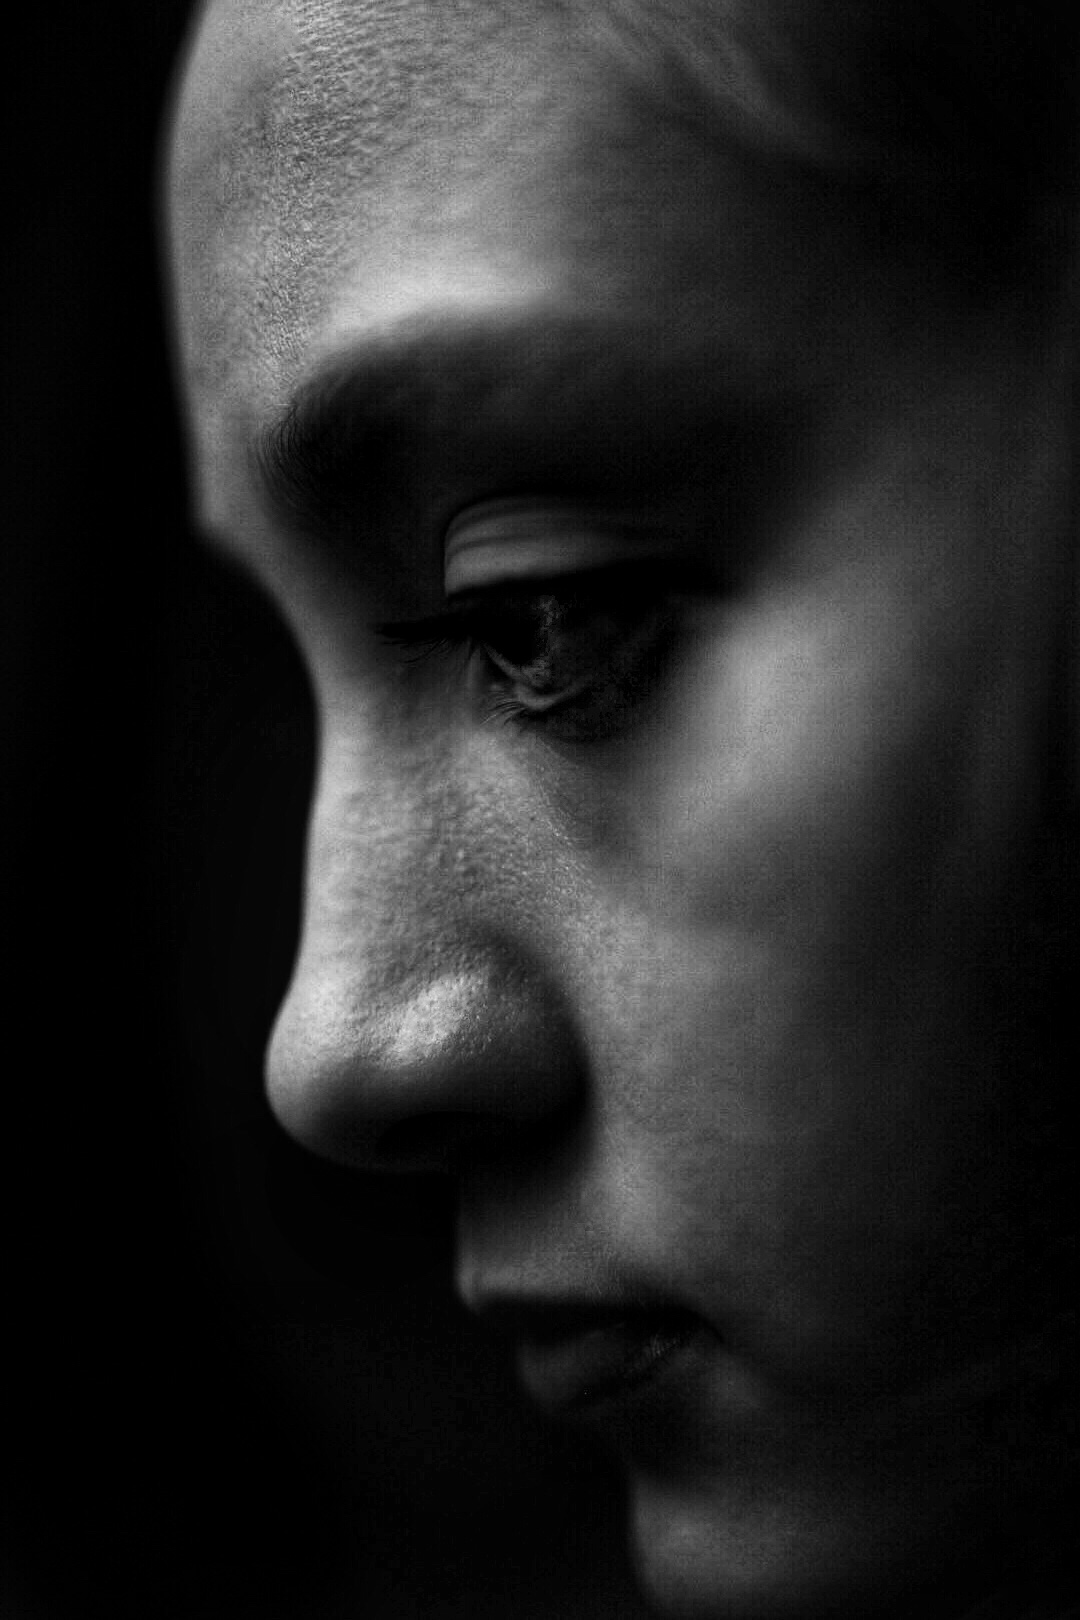 Sadness, by Ella Melko - IMAGES 2020 Student Winner